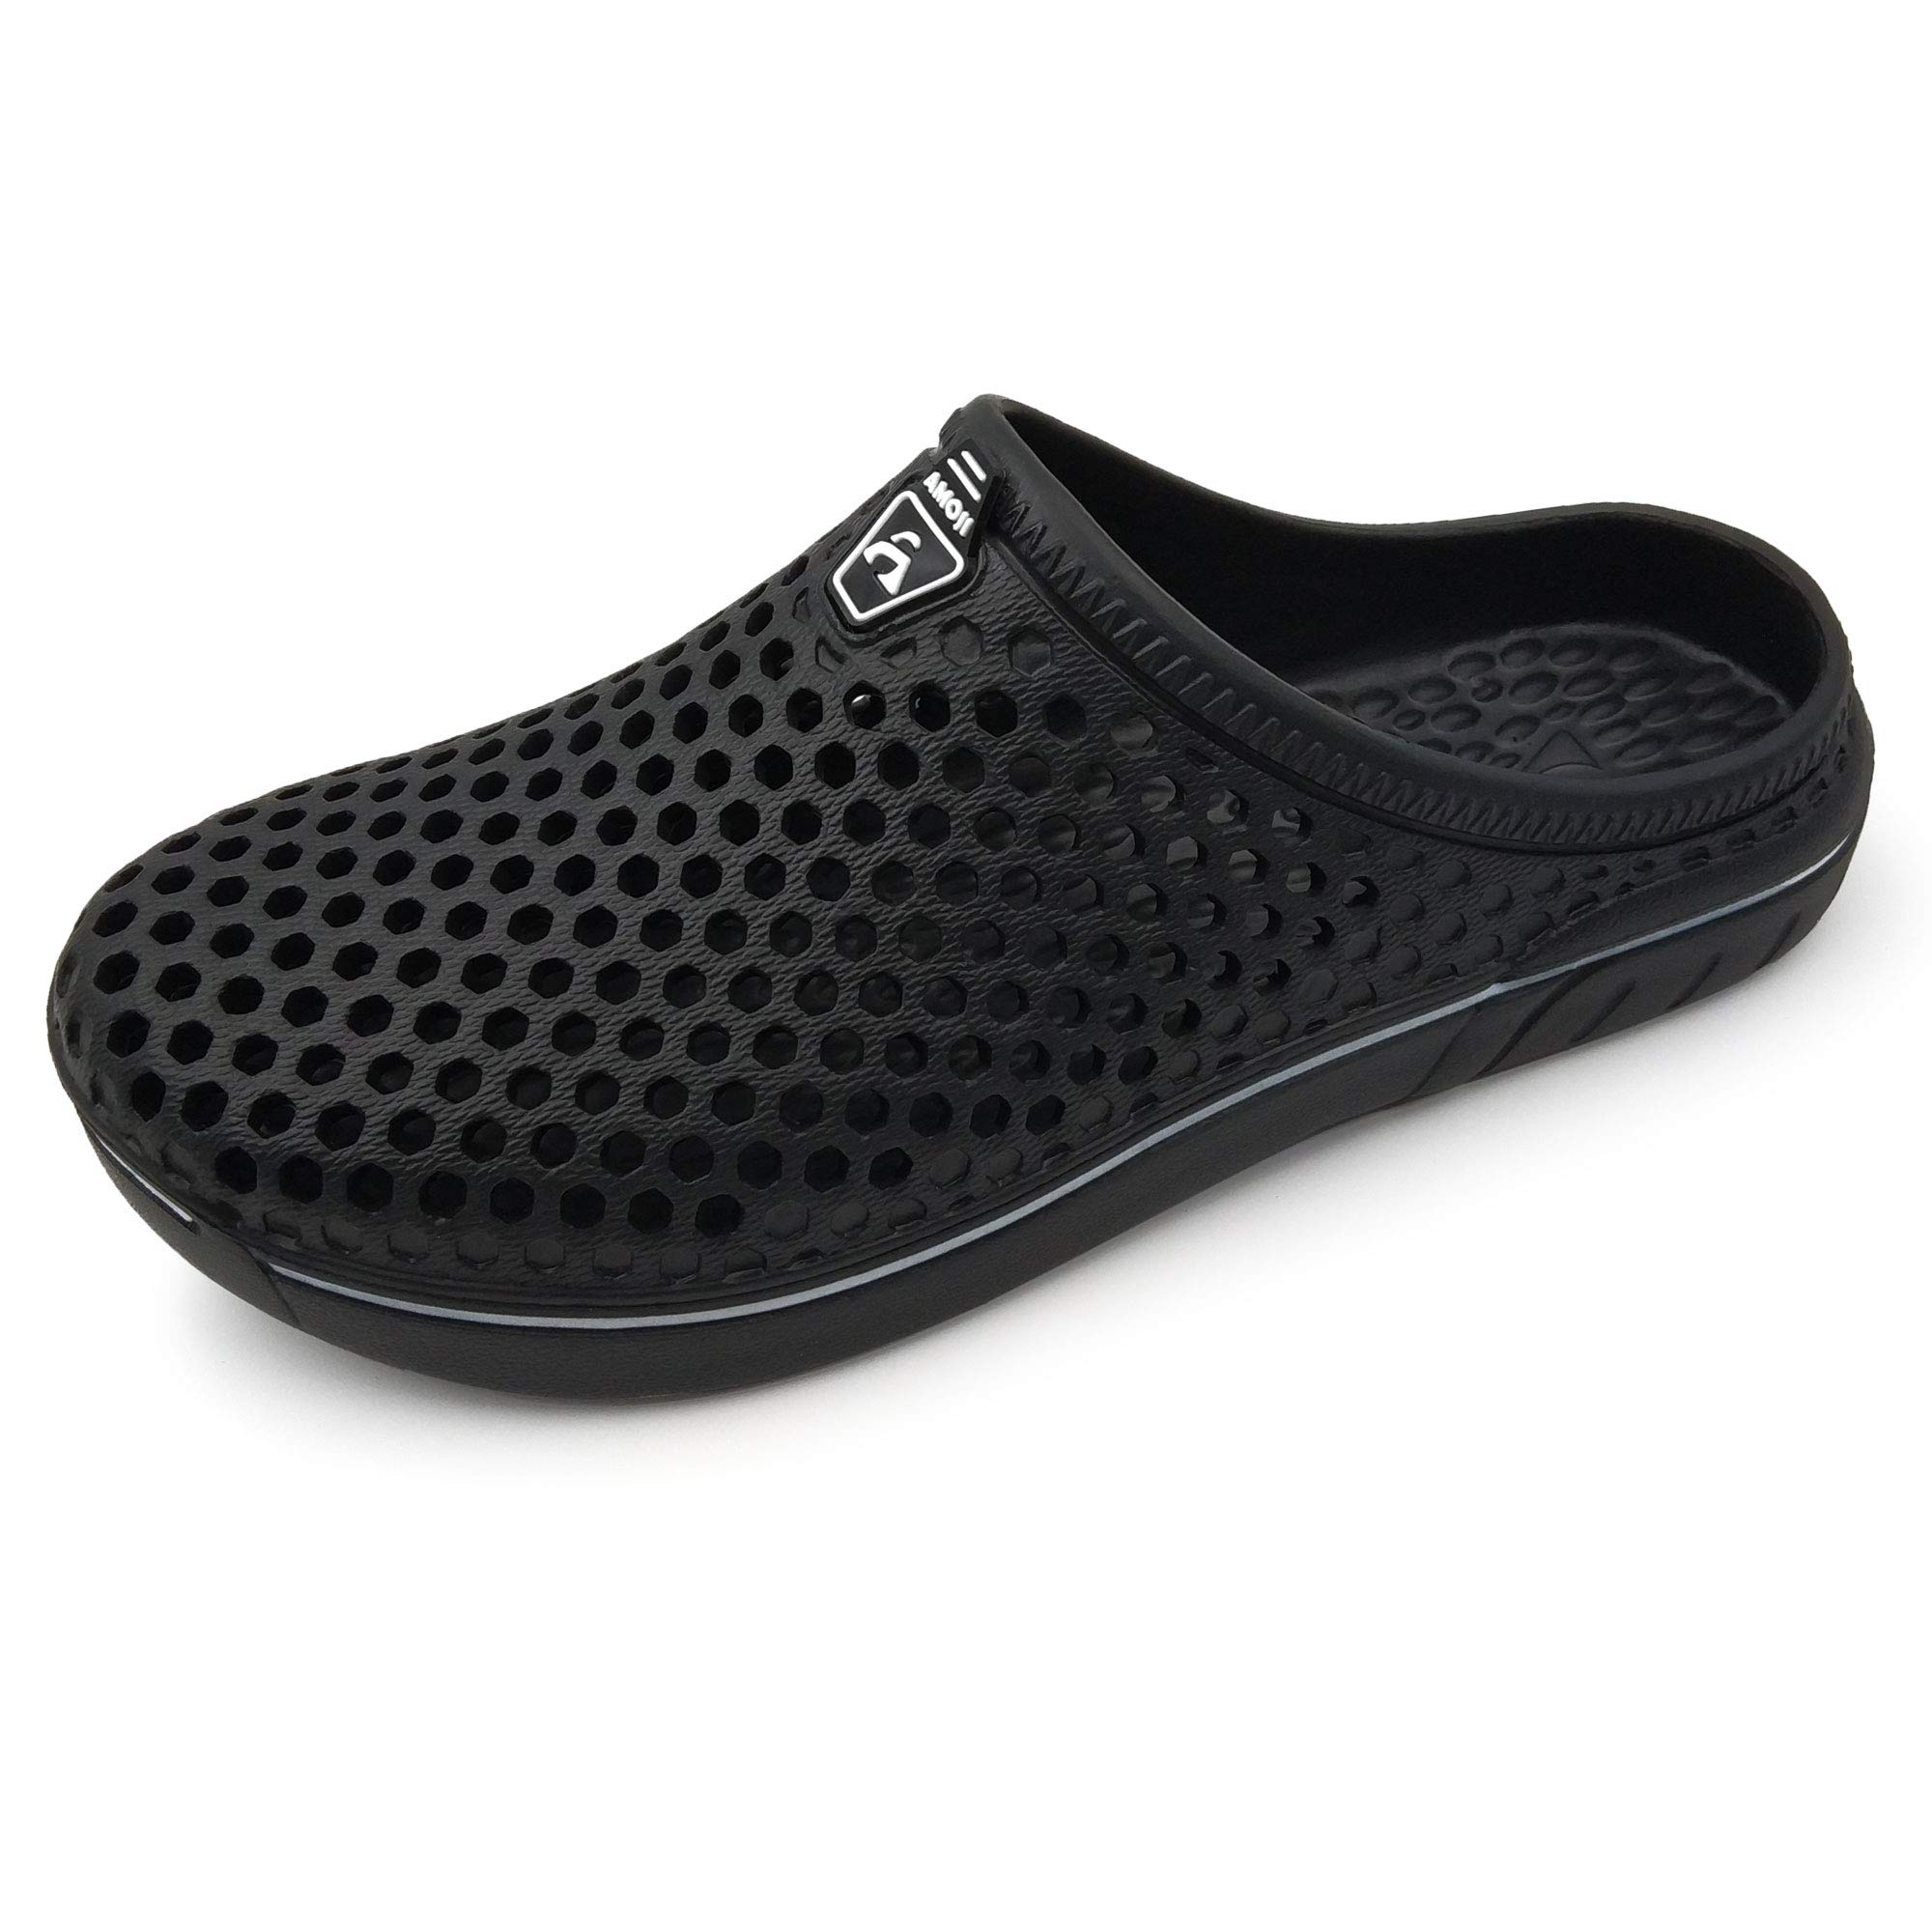 Amoji Unisex Garden Clogs Shoes Sandals Slippers AM1761 8 Women/7 Men Black